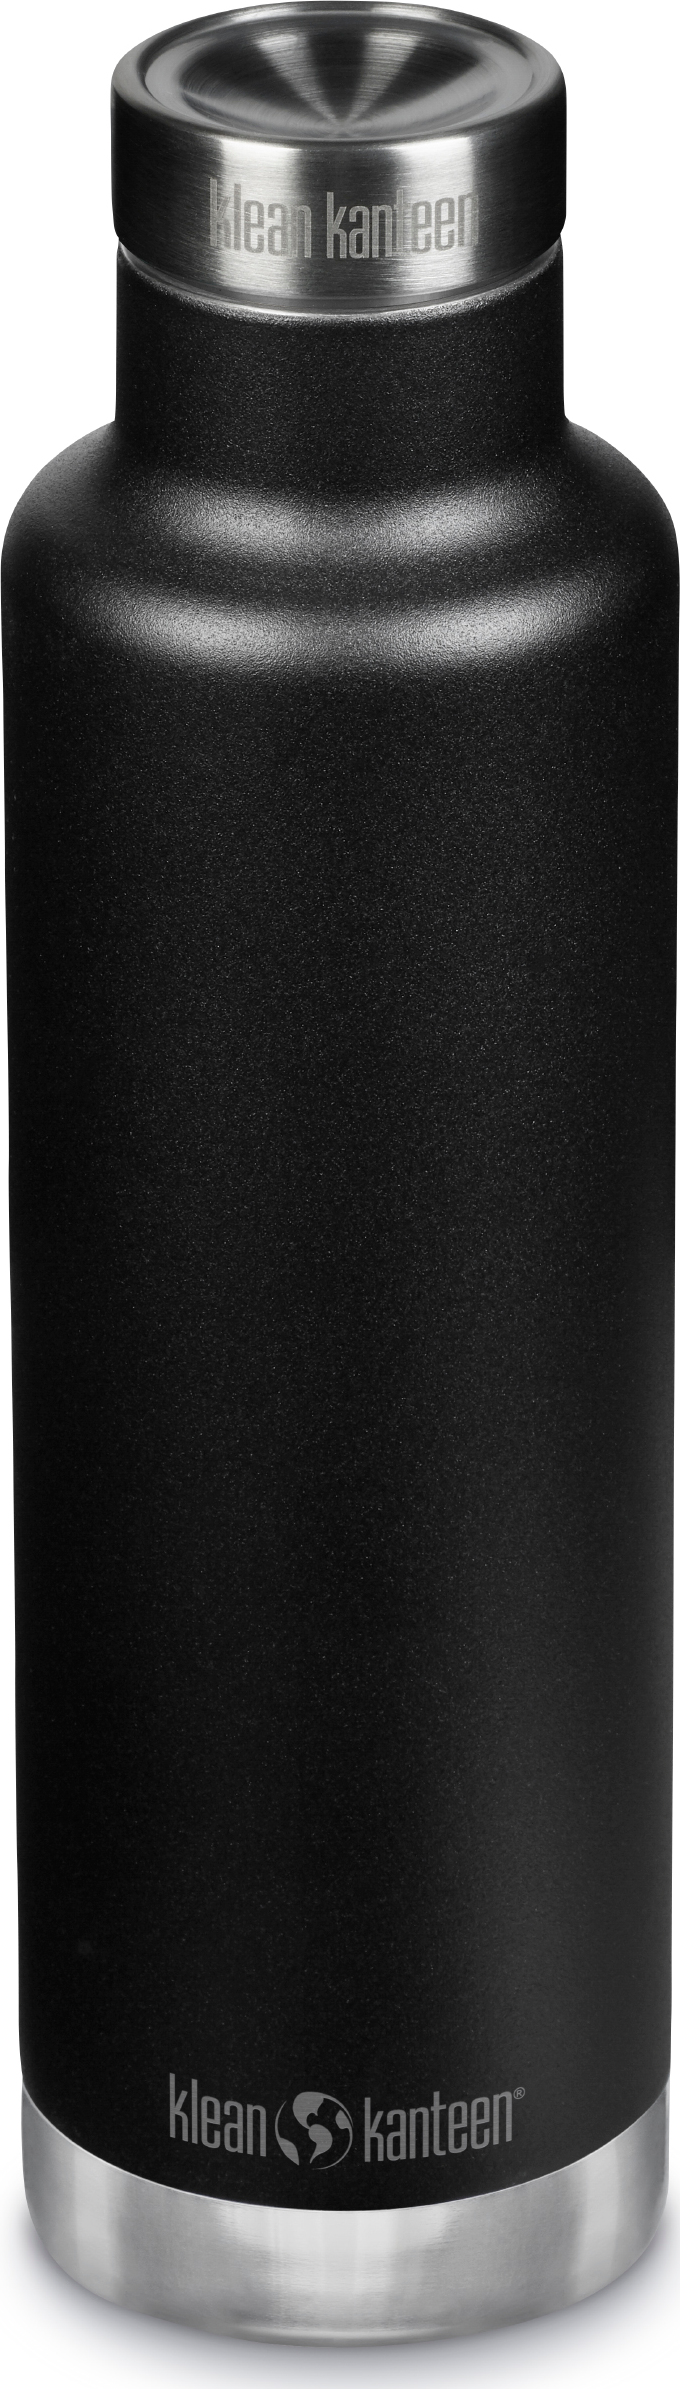 Klean Kanteen Insulated Classic Pour Through 750 ml Black 750 ml, Black